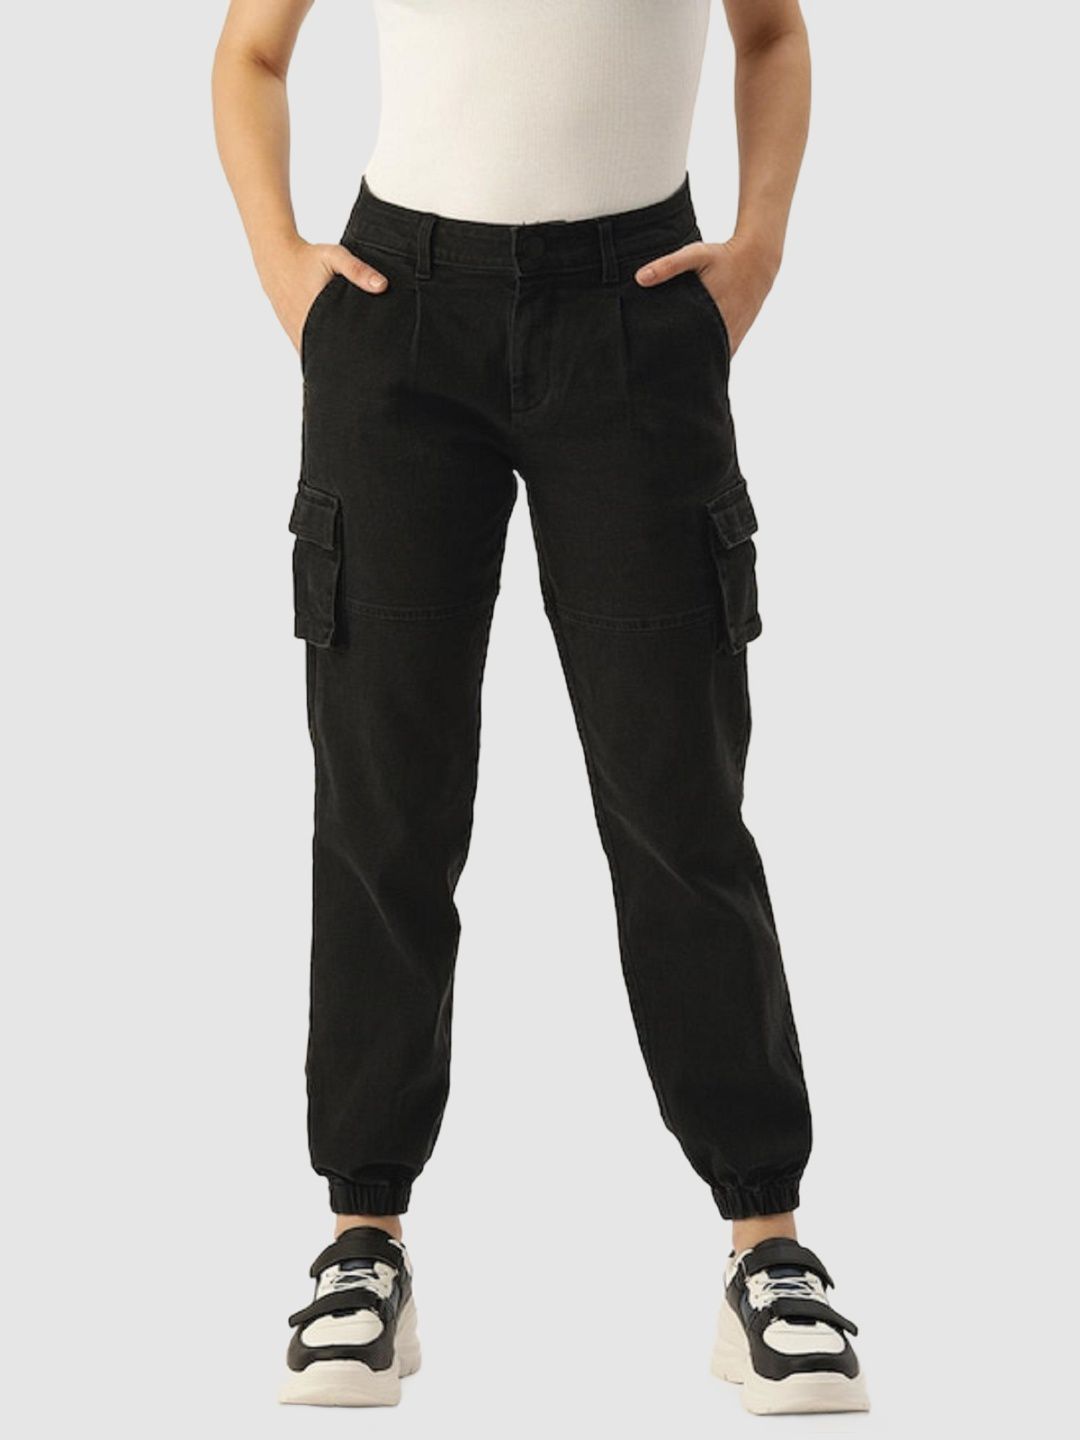     			IVOC - Black Cotton Blend Jogger Women's Jeans ( Pack of 1 )